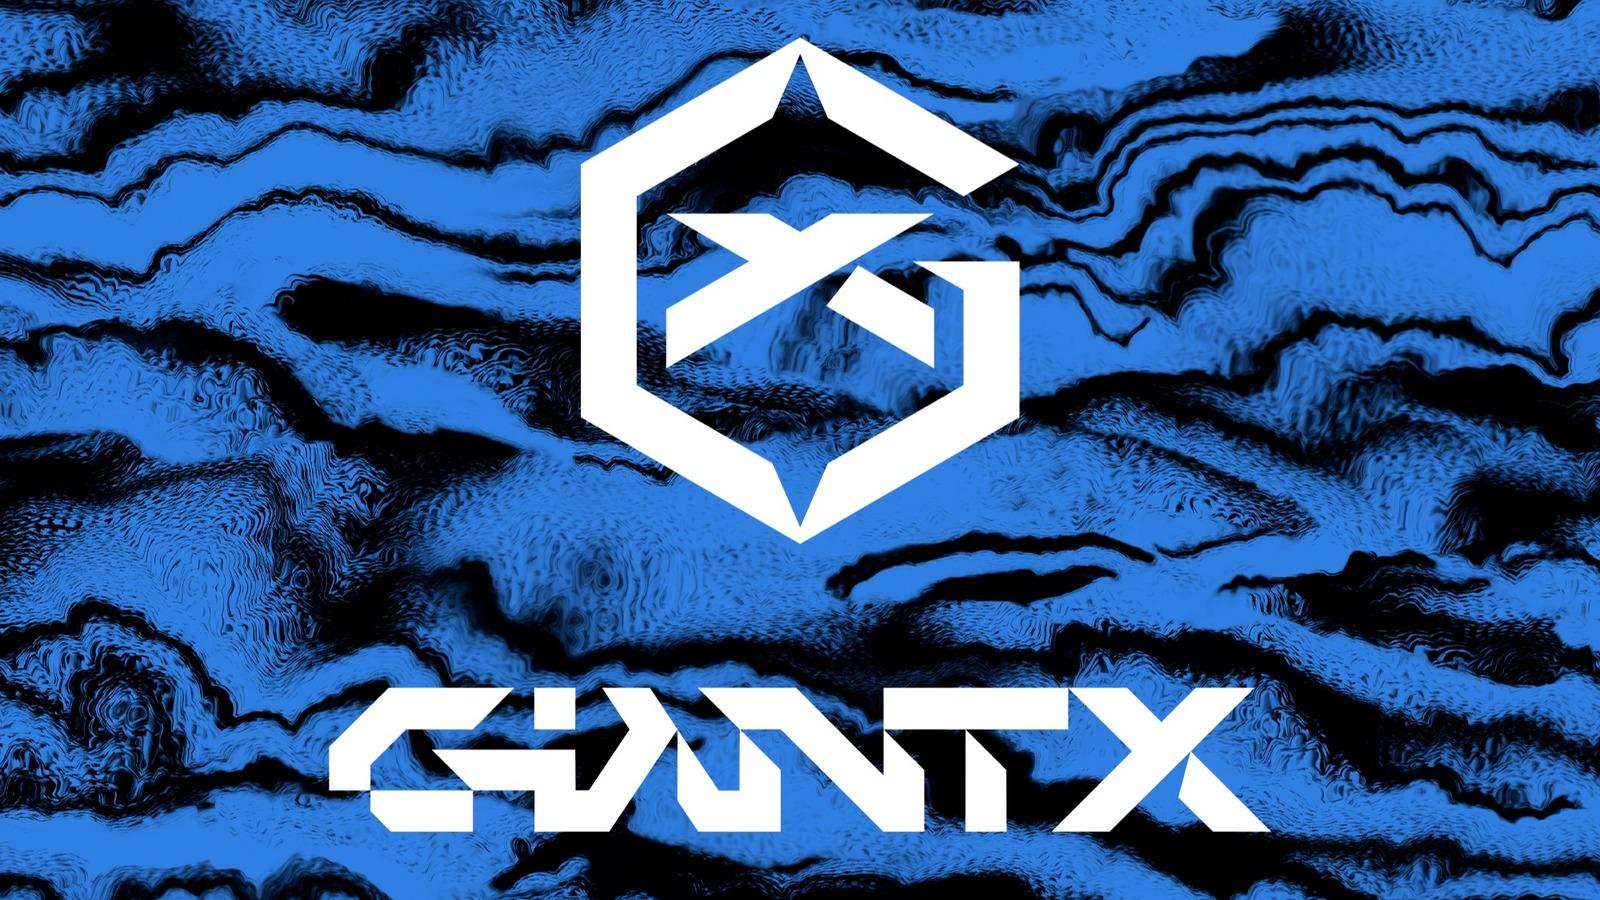 GIANTX